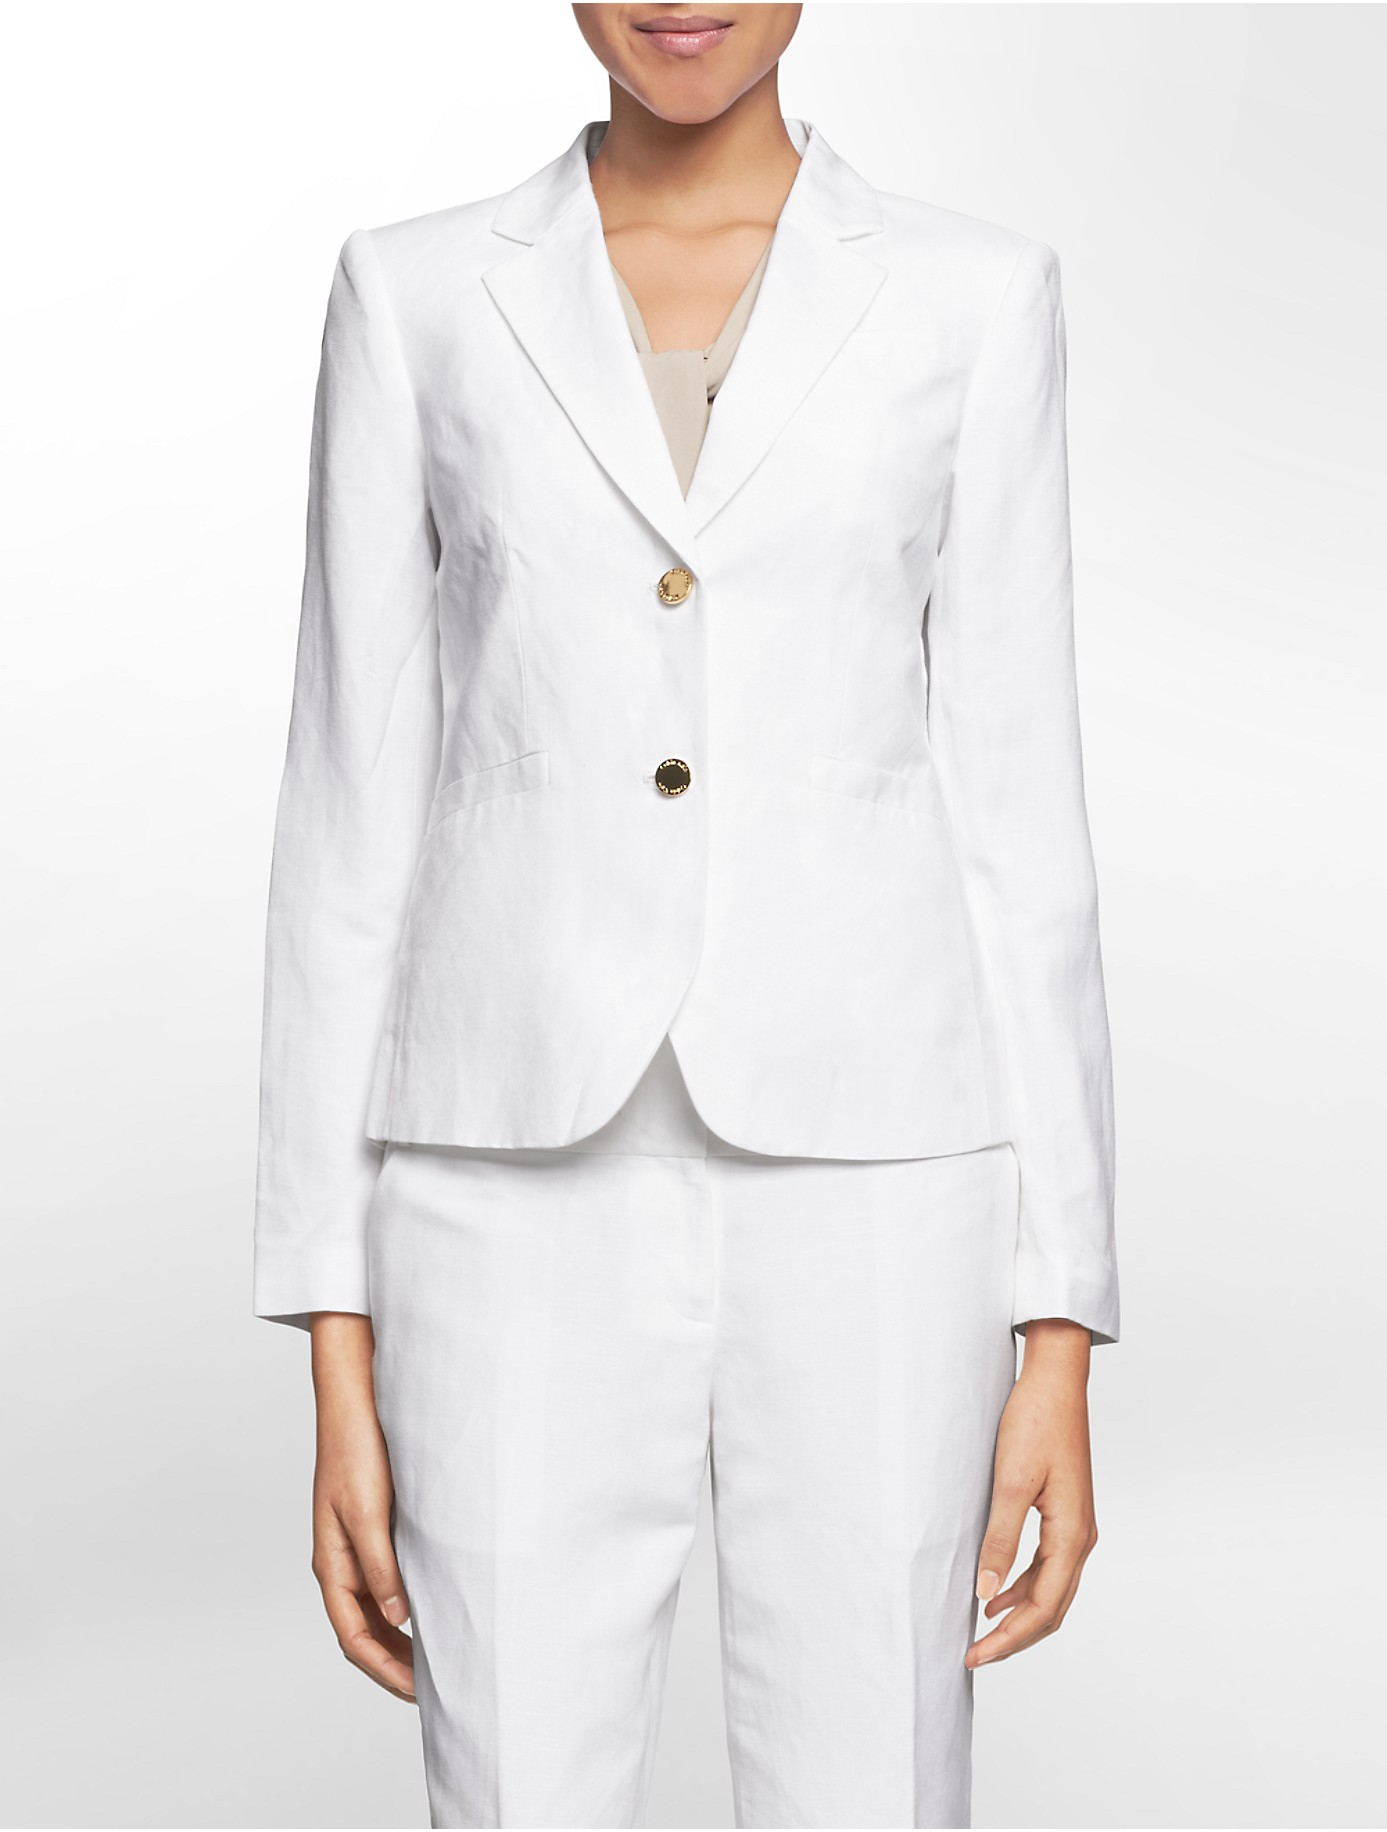 Lyst - Calvin Klein White Label Two Button Linen Suit Jacket in White